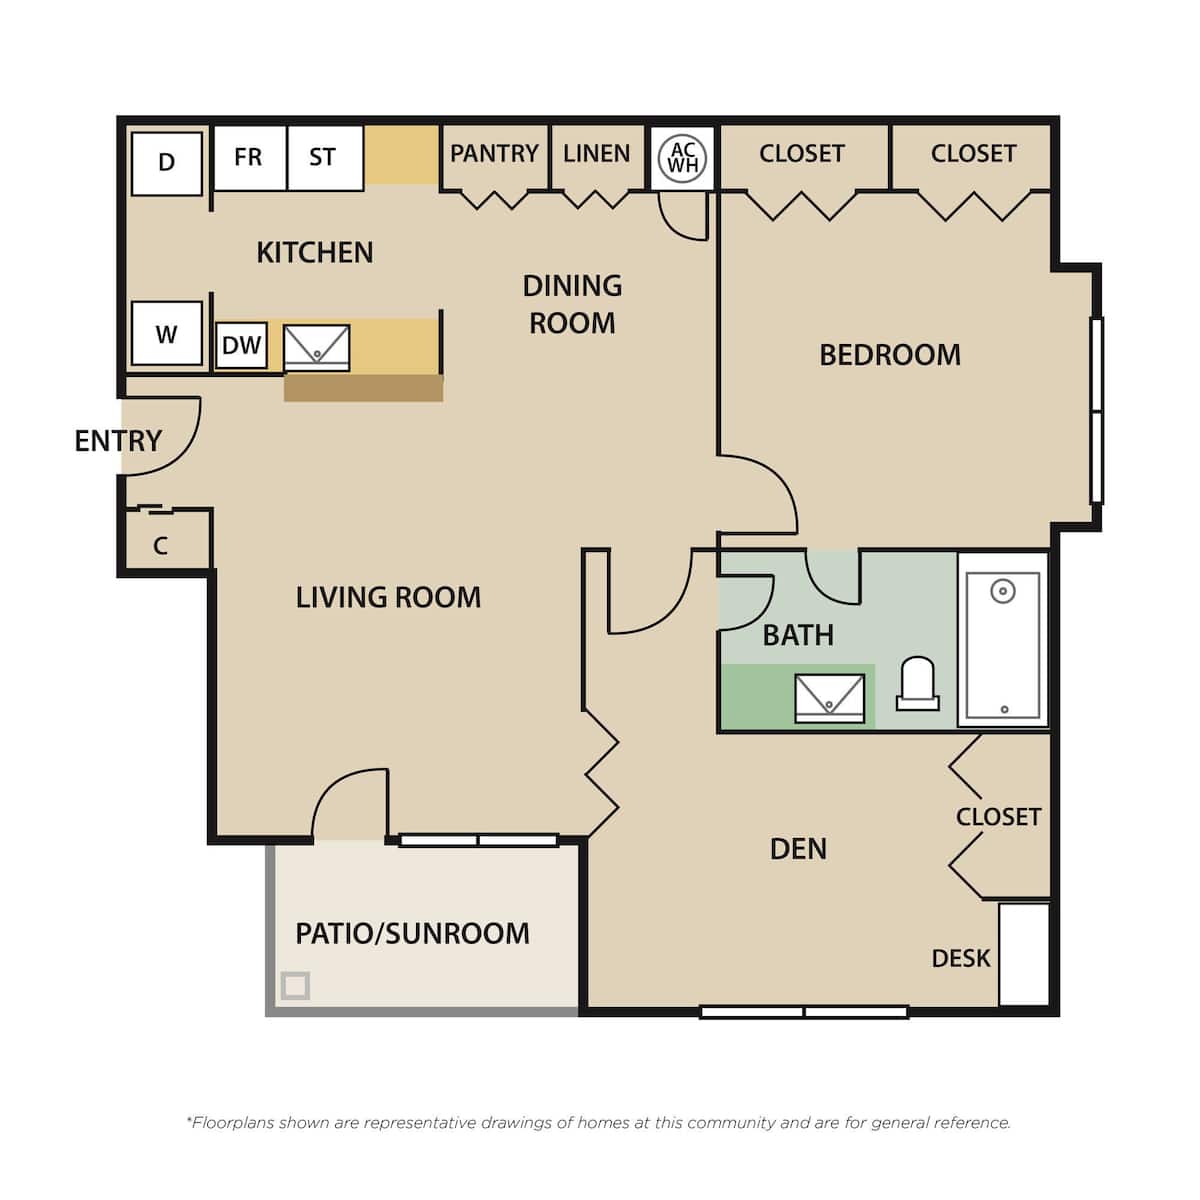 Floorplan diagram for PARK A7, showing 1 bedroom